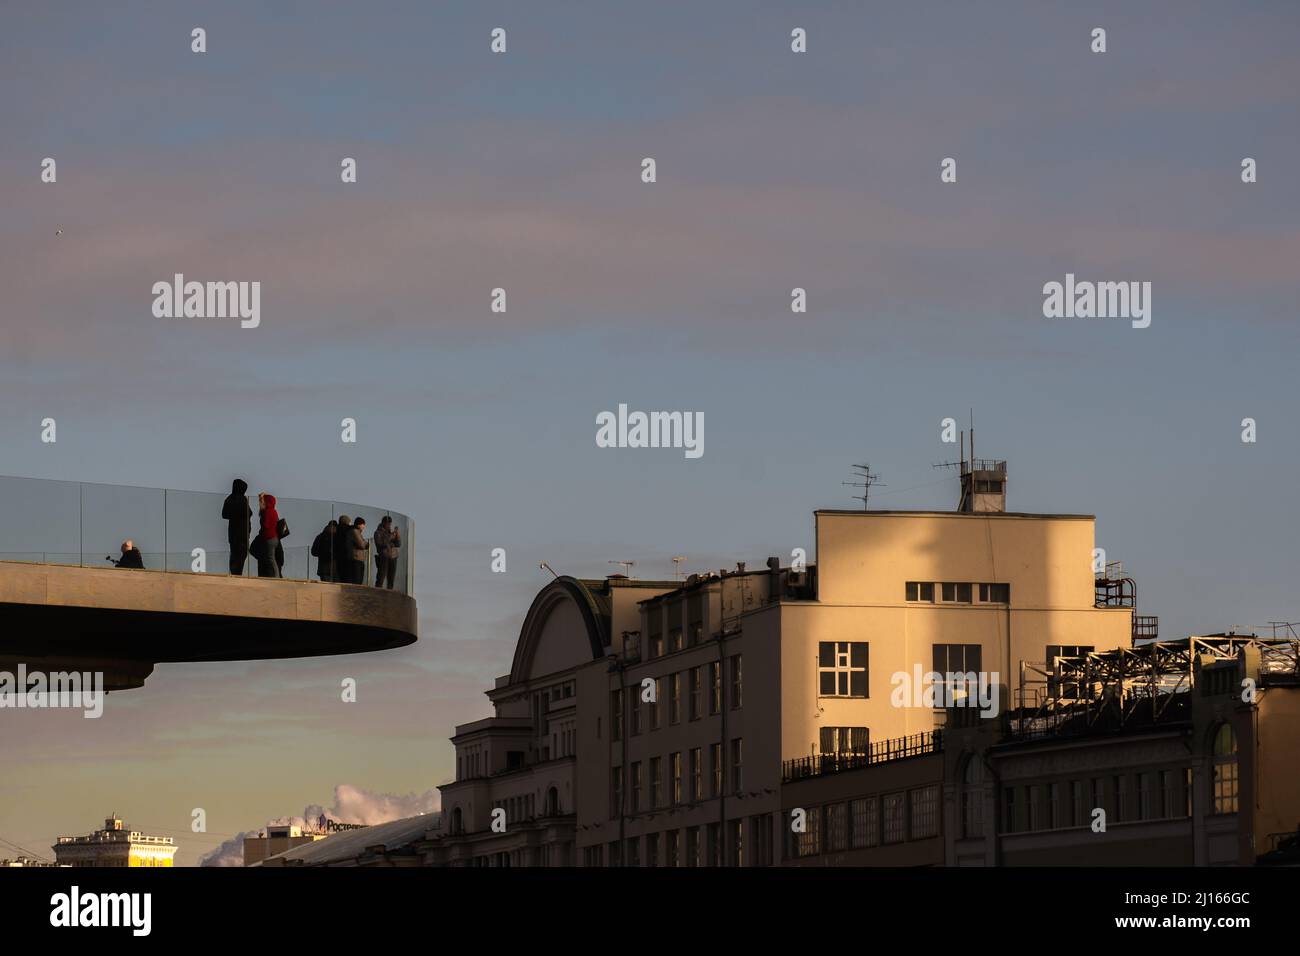 15.03.2022. Mosca, Russia. Persone sul ponte di osservazione nel Parco Zaryadye a Mosca. Foto di alta qualità Foto Stock